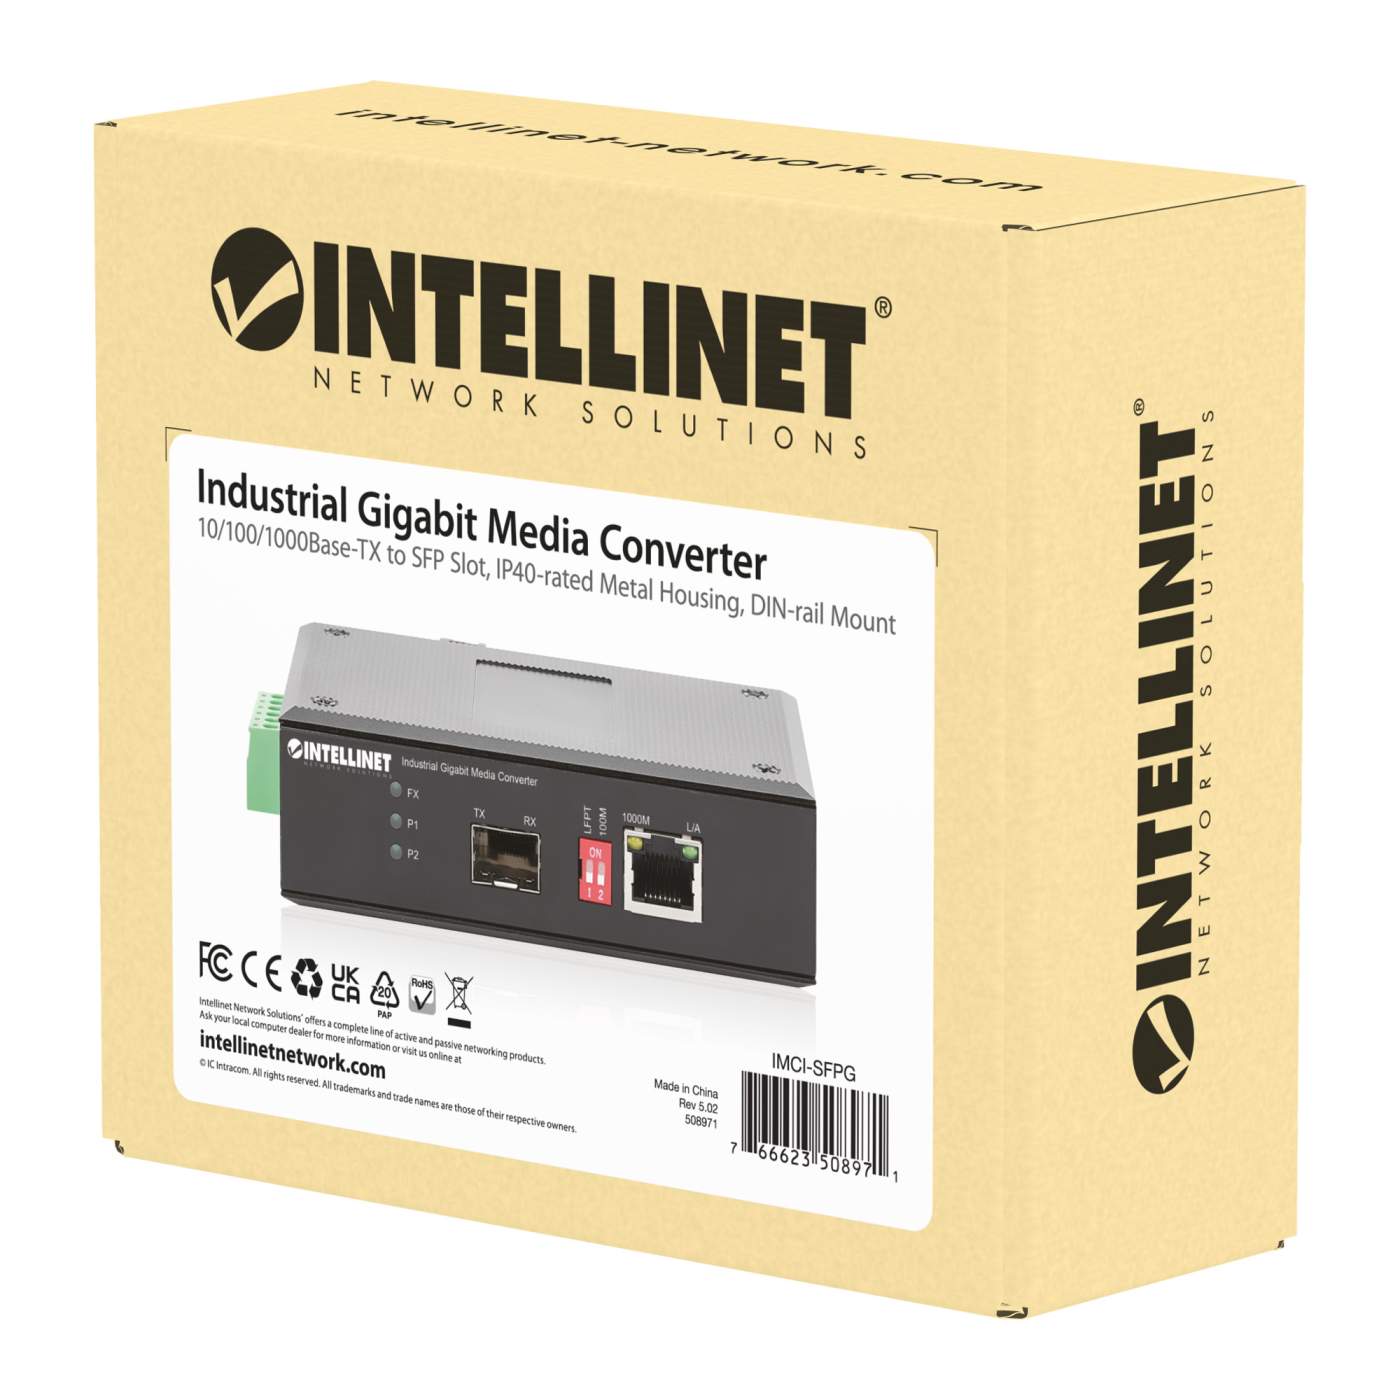 Industrial Gigabit Media Converter Packaging Image 2